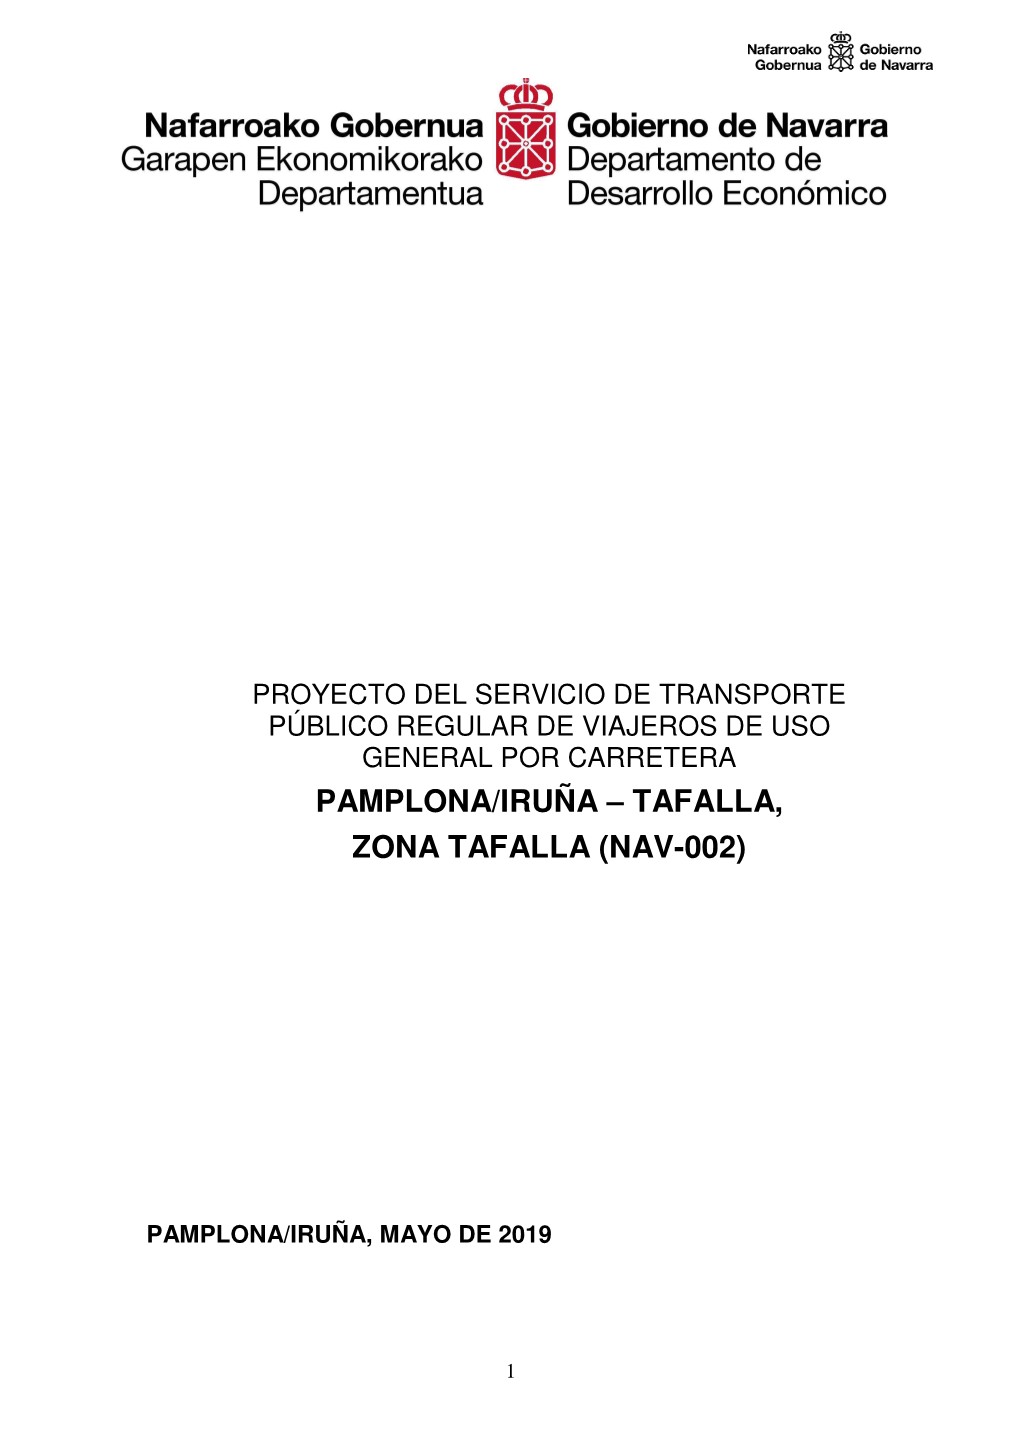 190524 Proyecto Pamplona-Tafalla Zona Tafalla (VNA-002)